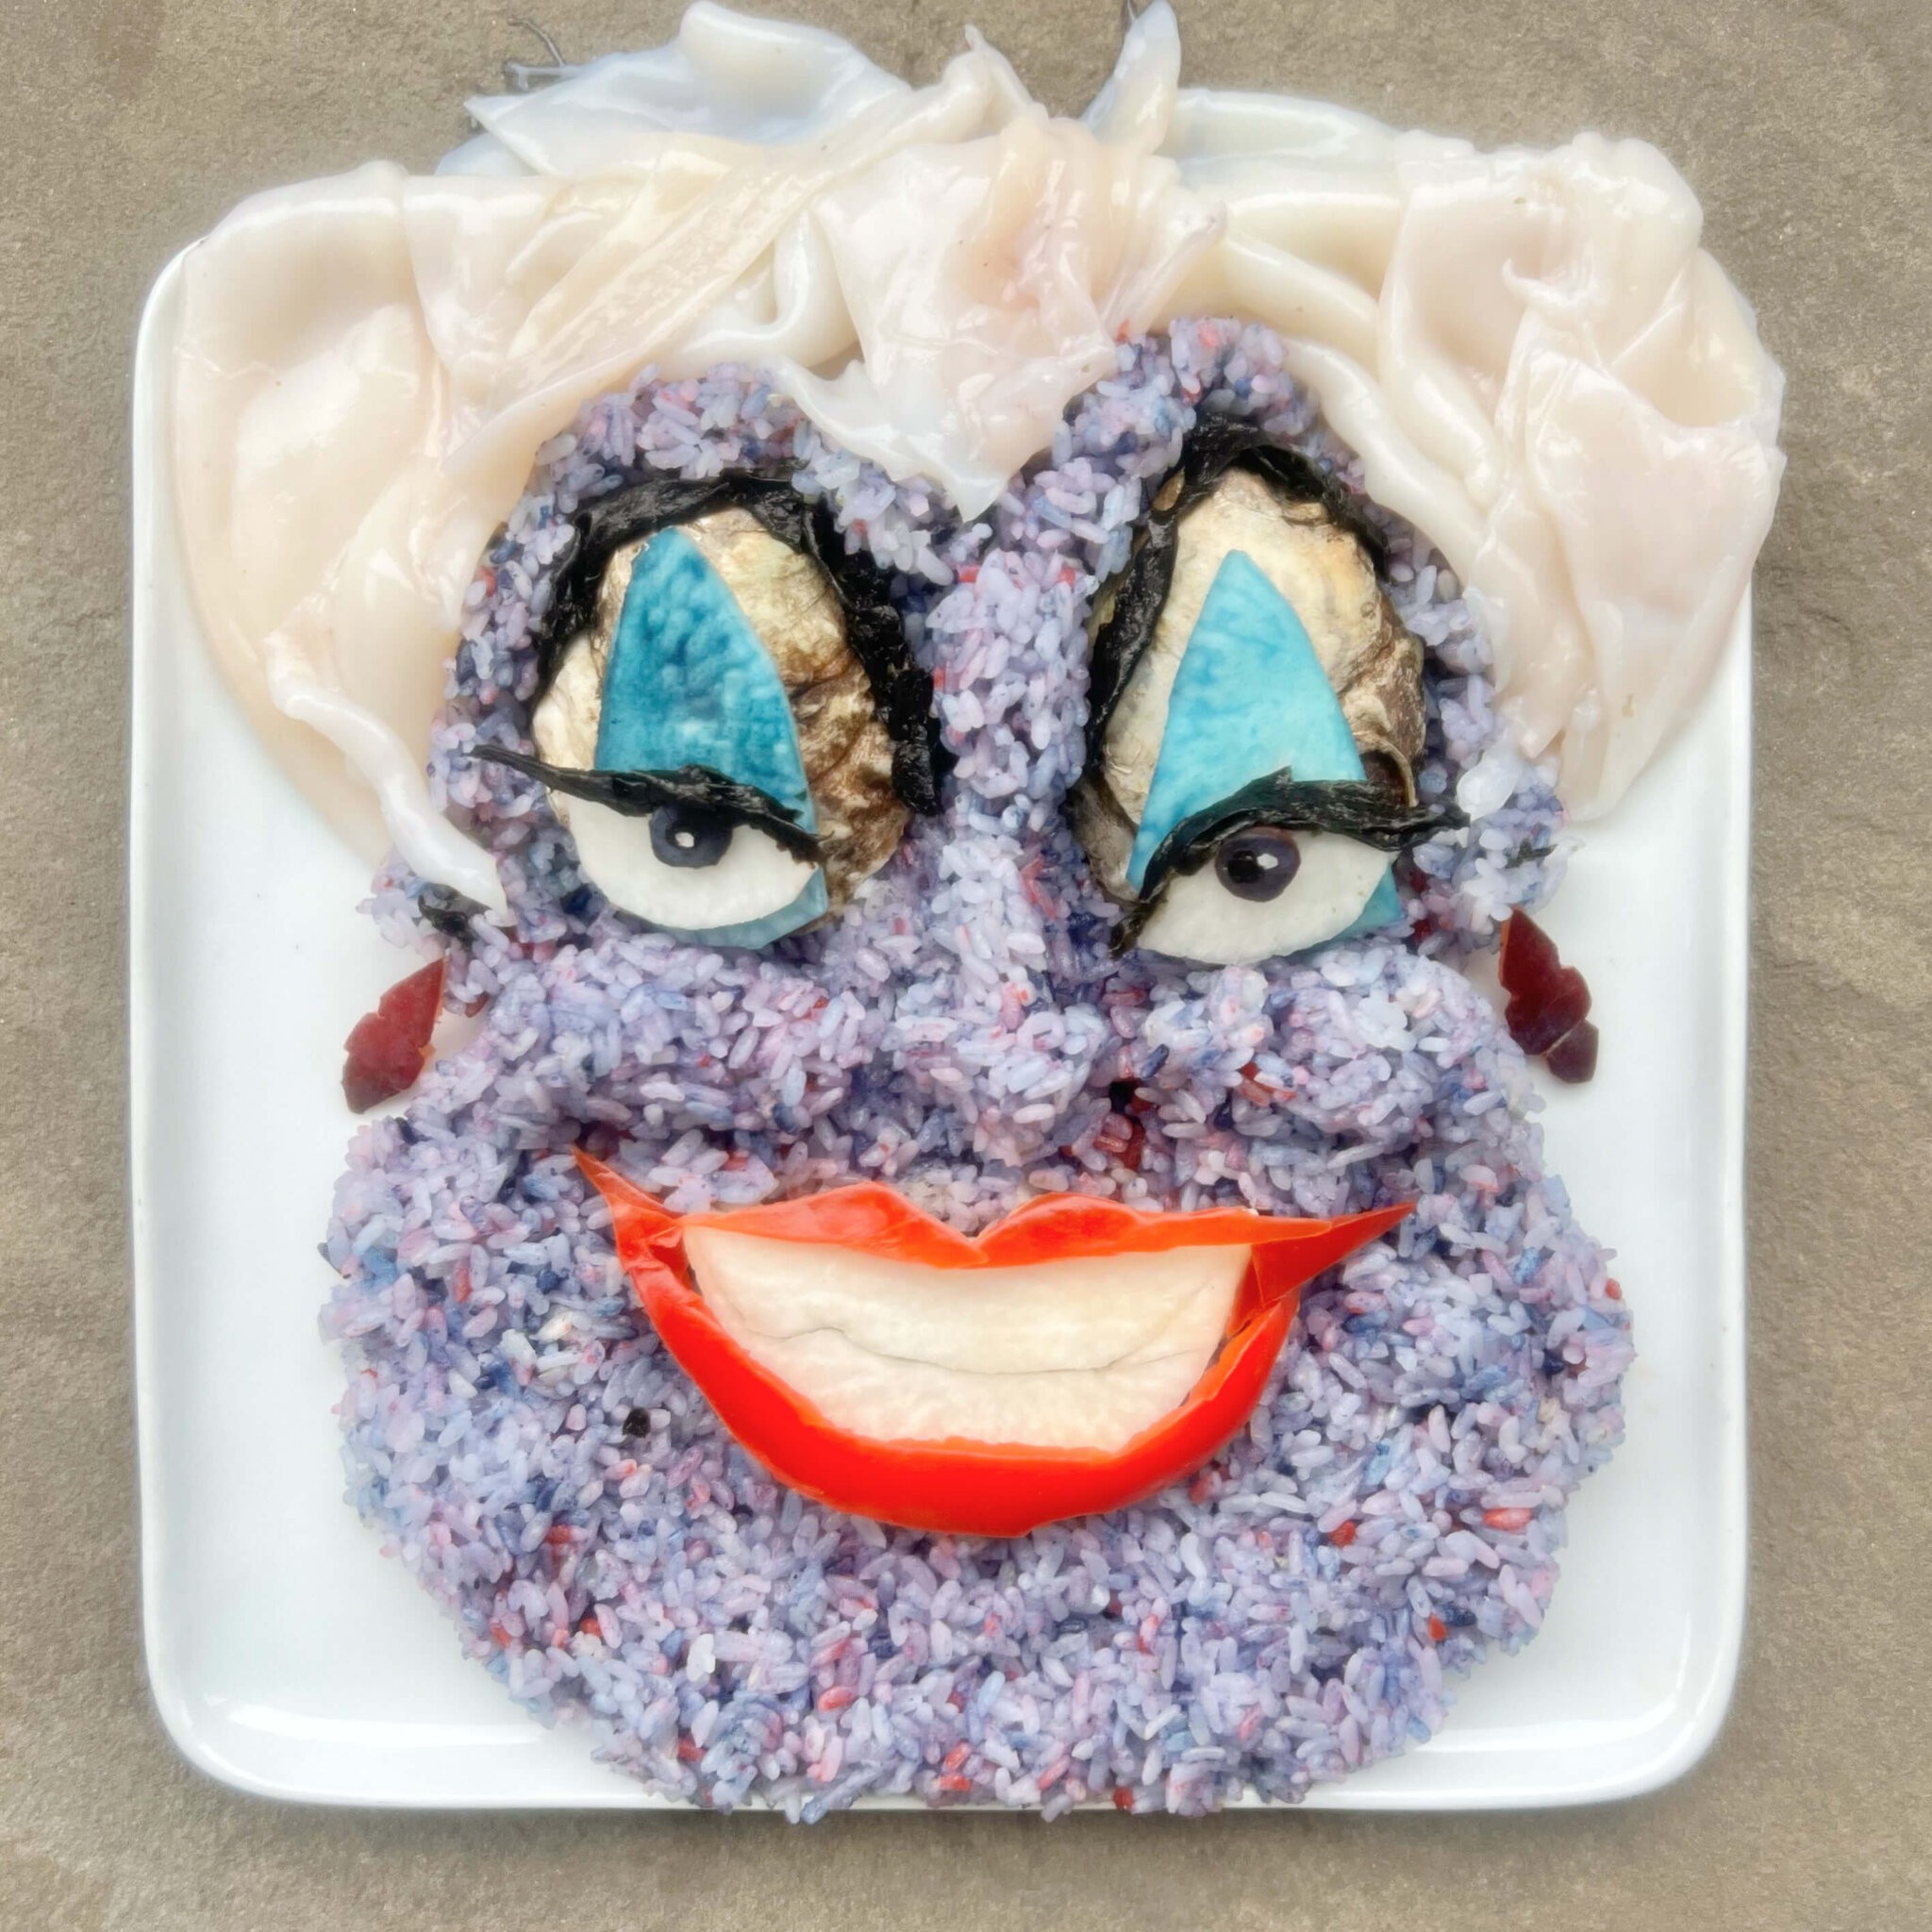 Ursula made with Citarella calamari and Montauk oysters, food art by Harley Langberg